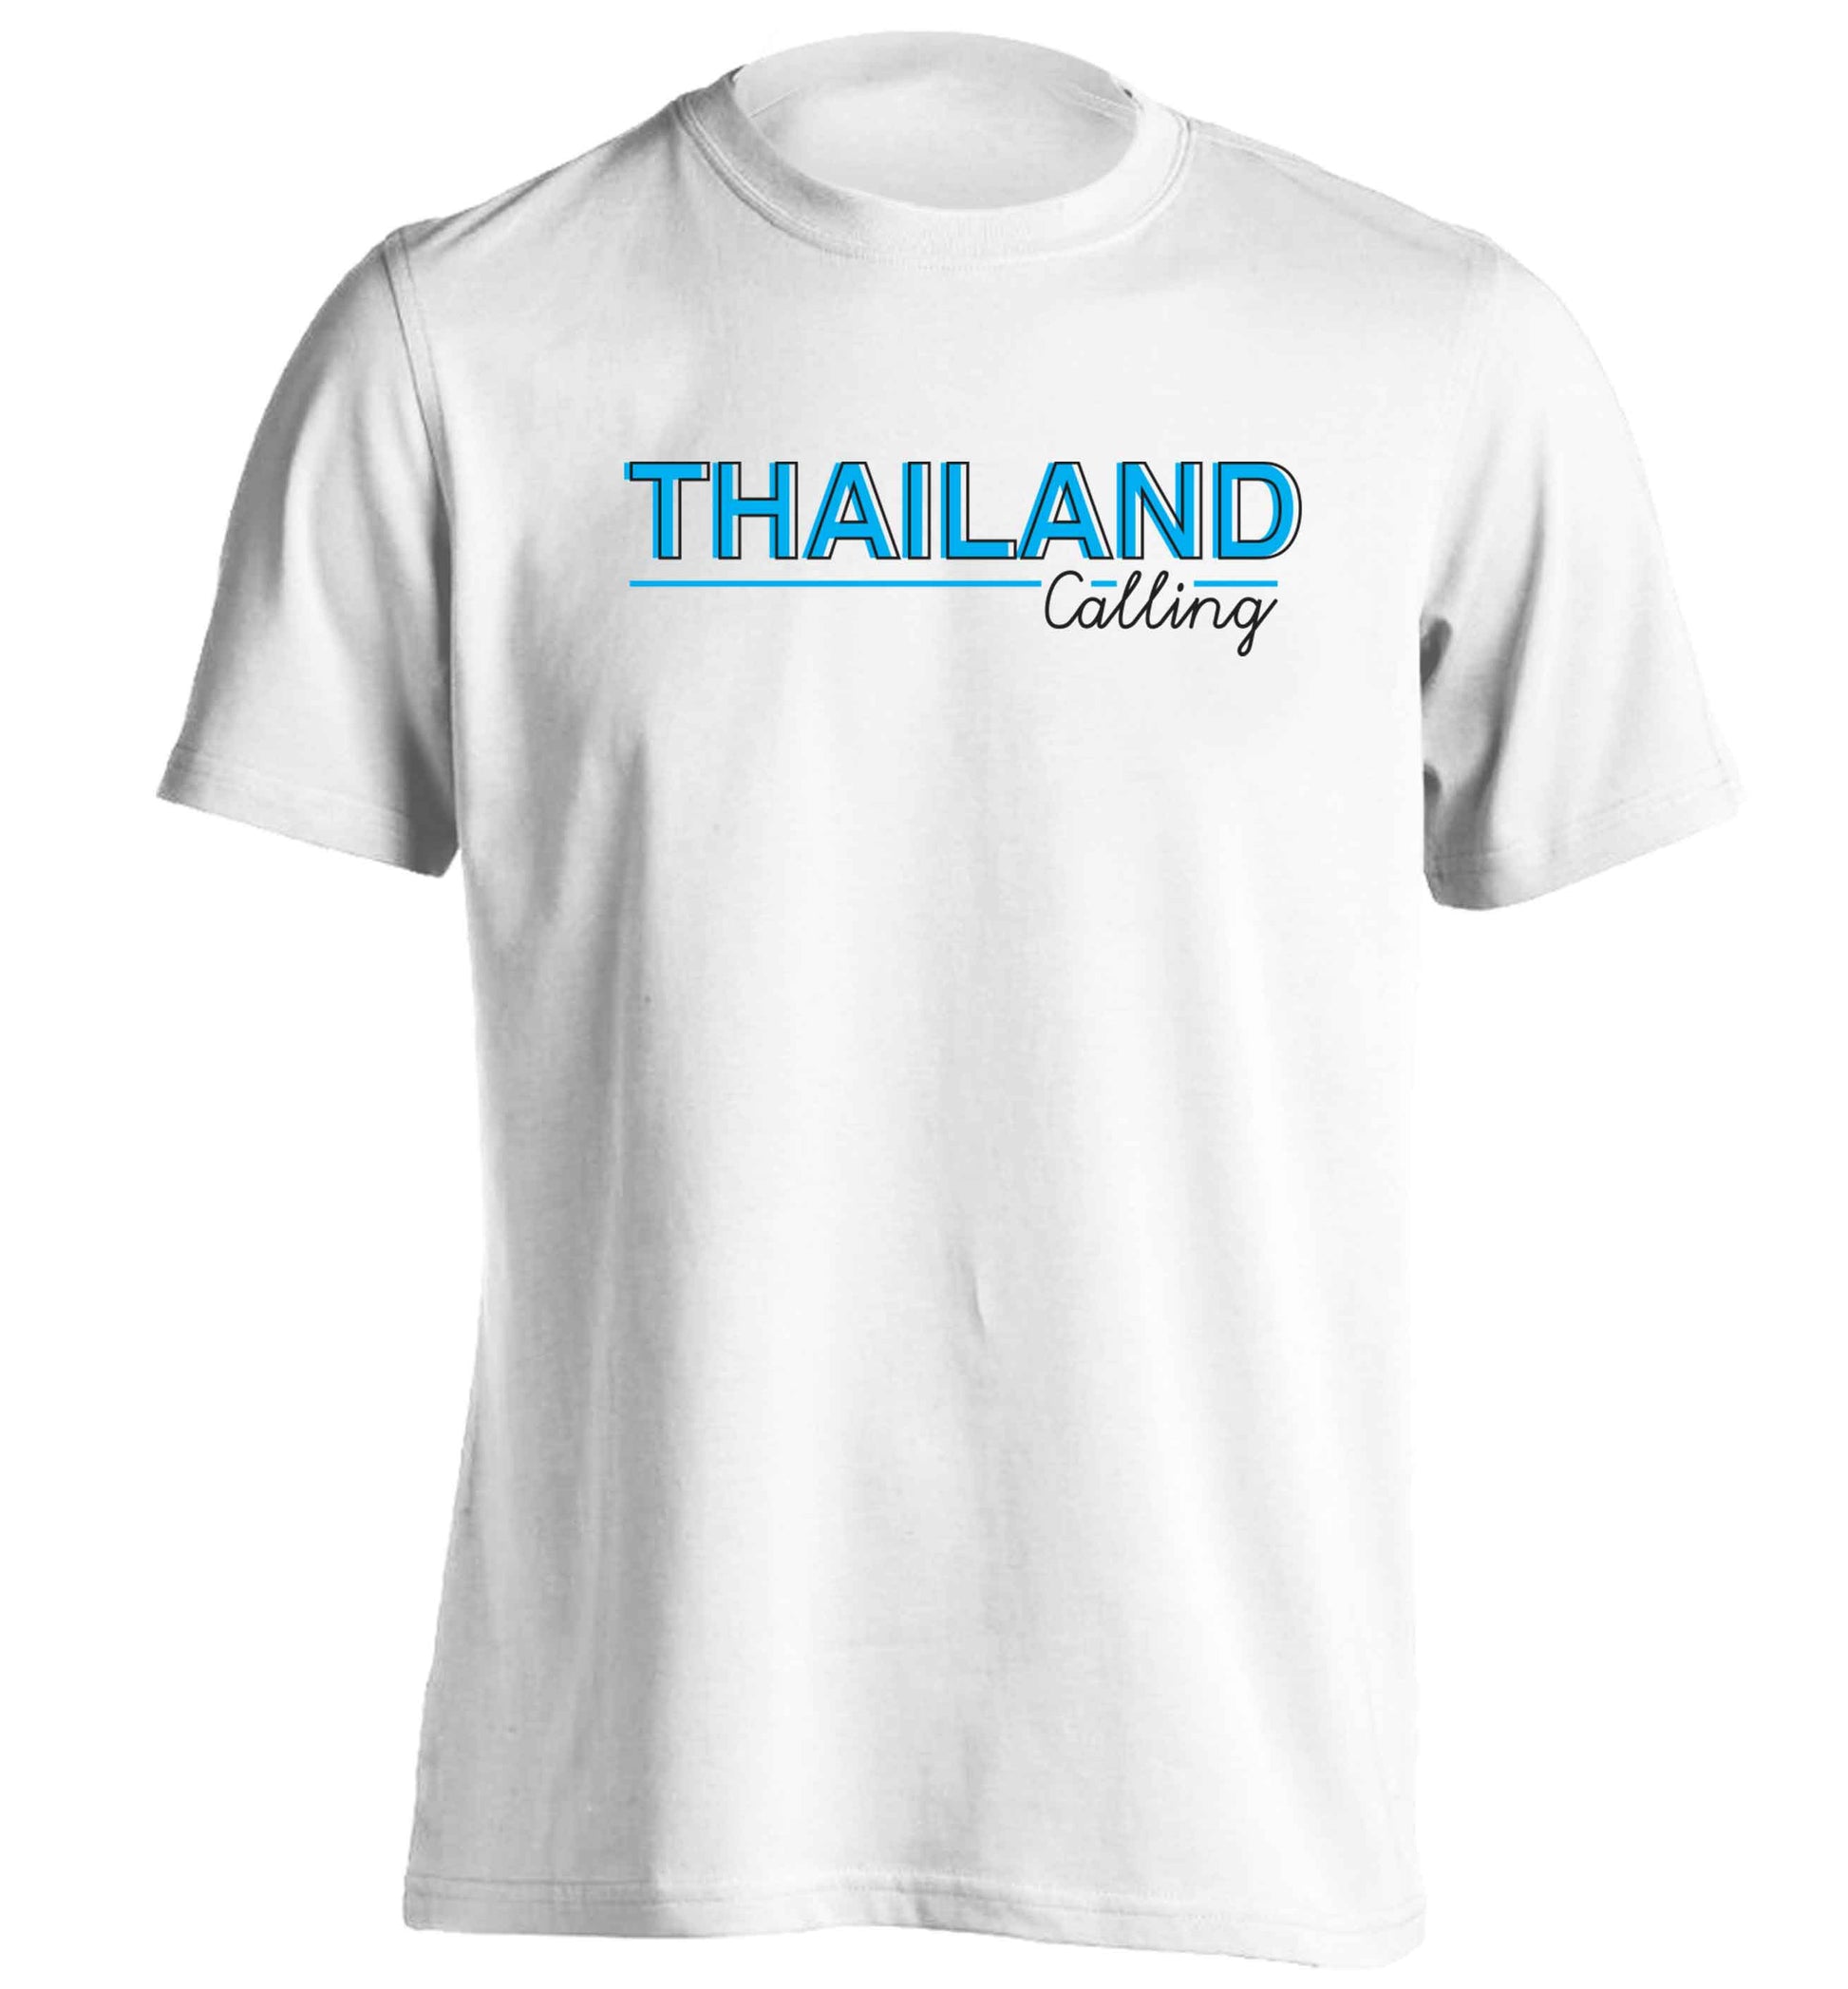 Thailand calling adults unisex white Tshirt 2XL